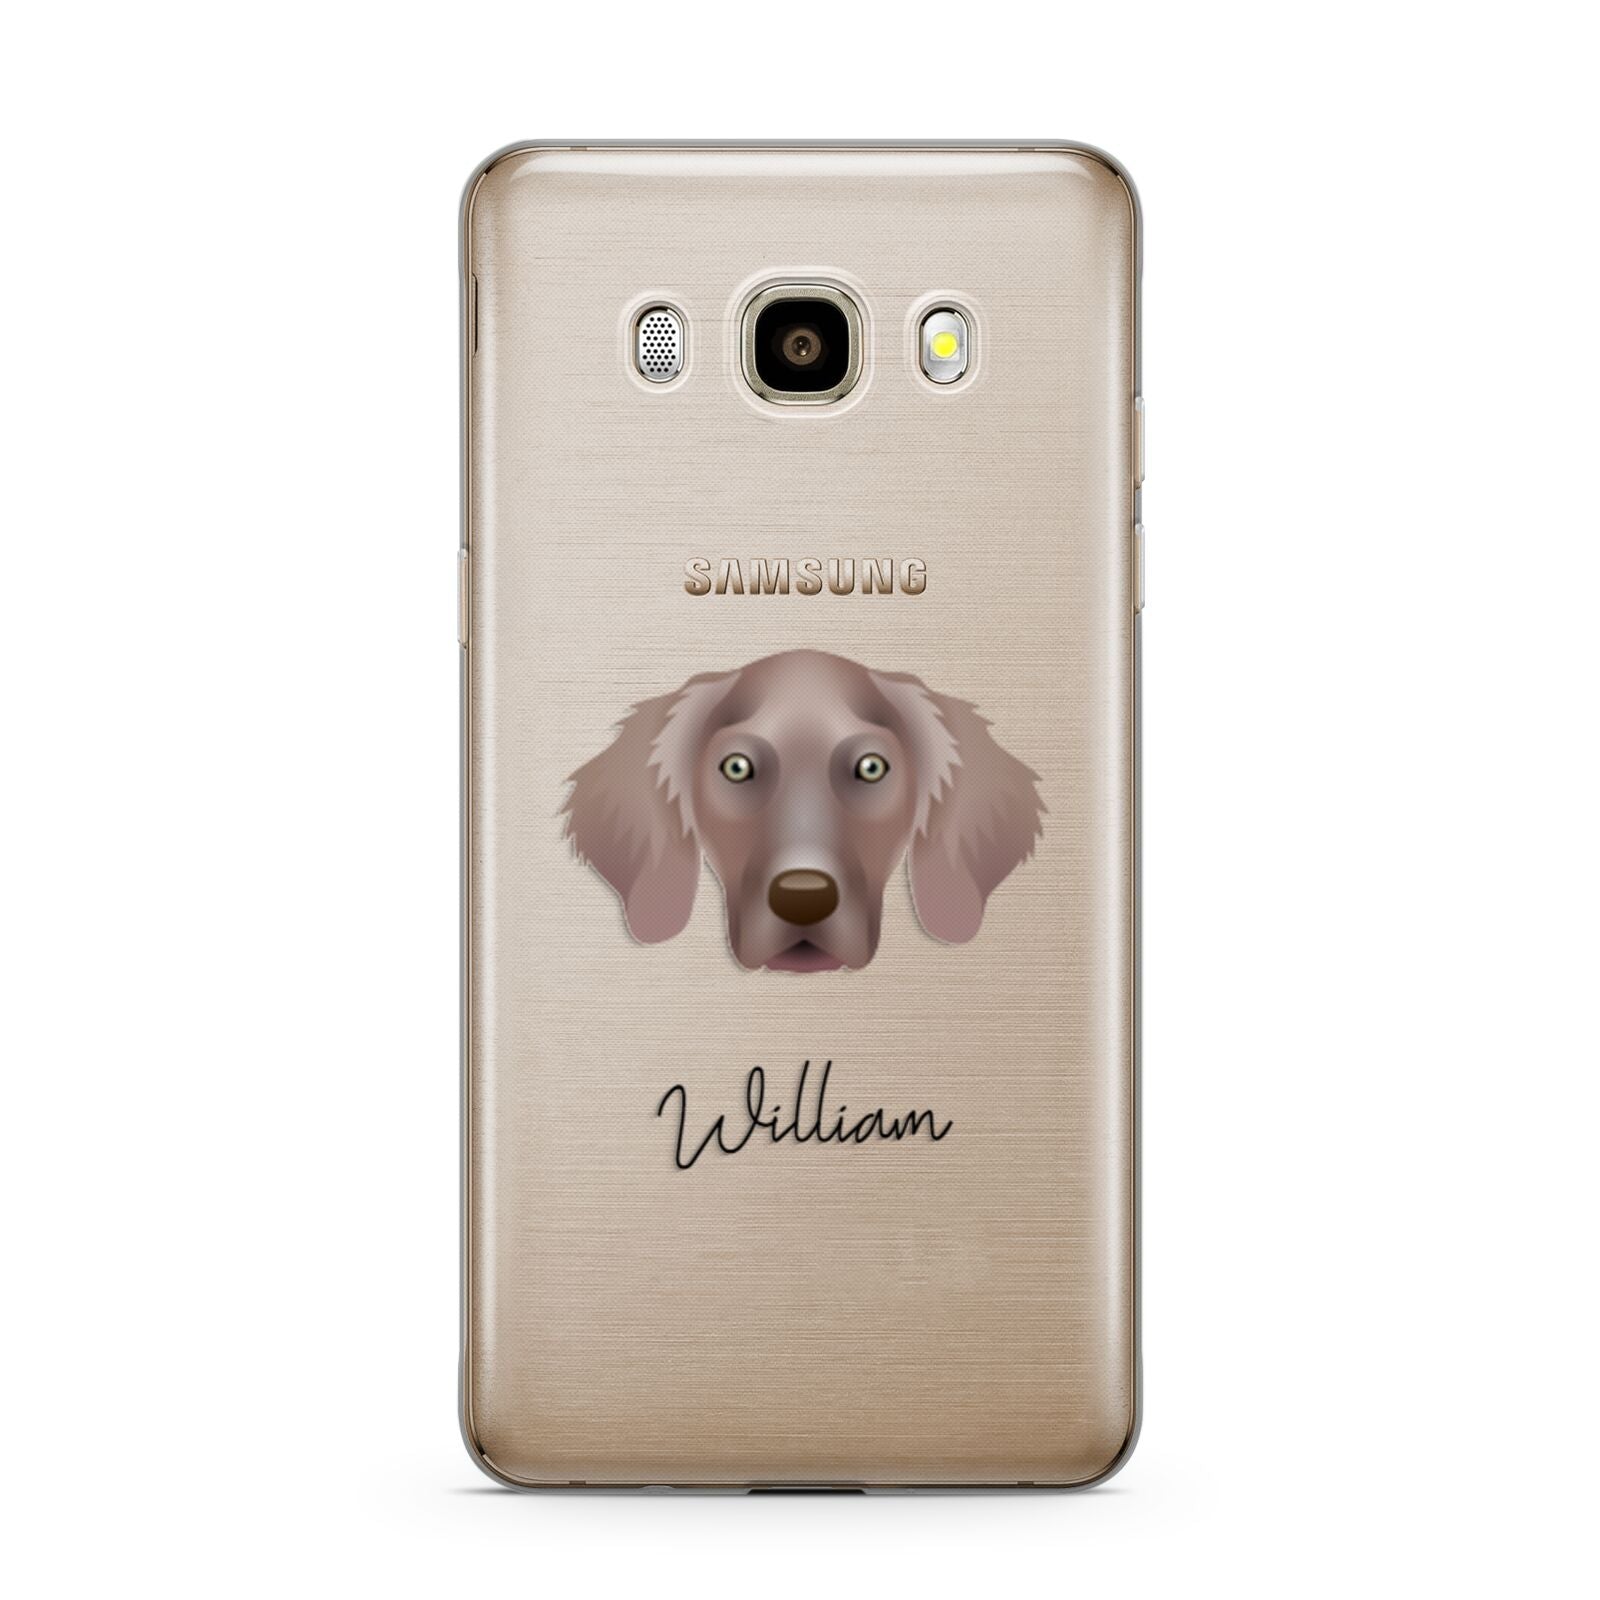 Weimaraner Personalised Samsung Galaxy J7 2016 Case on gold phone